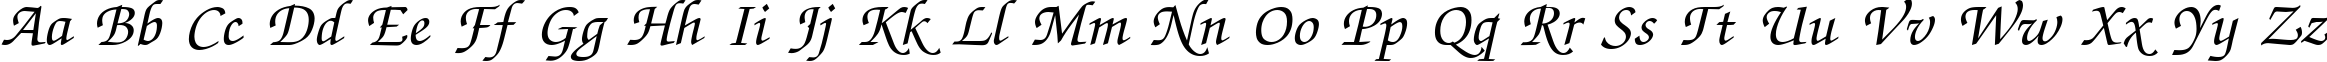 Пример написания английского алфавита шрифтом Zapf ChanceC Italic